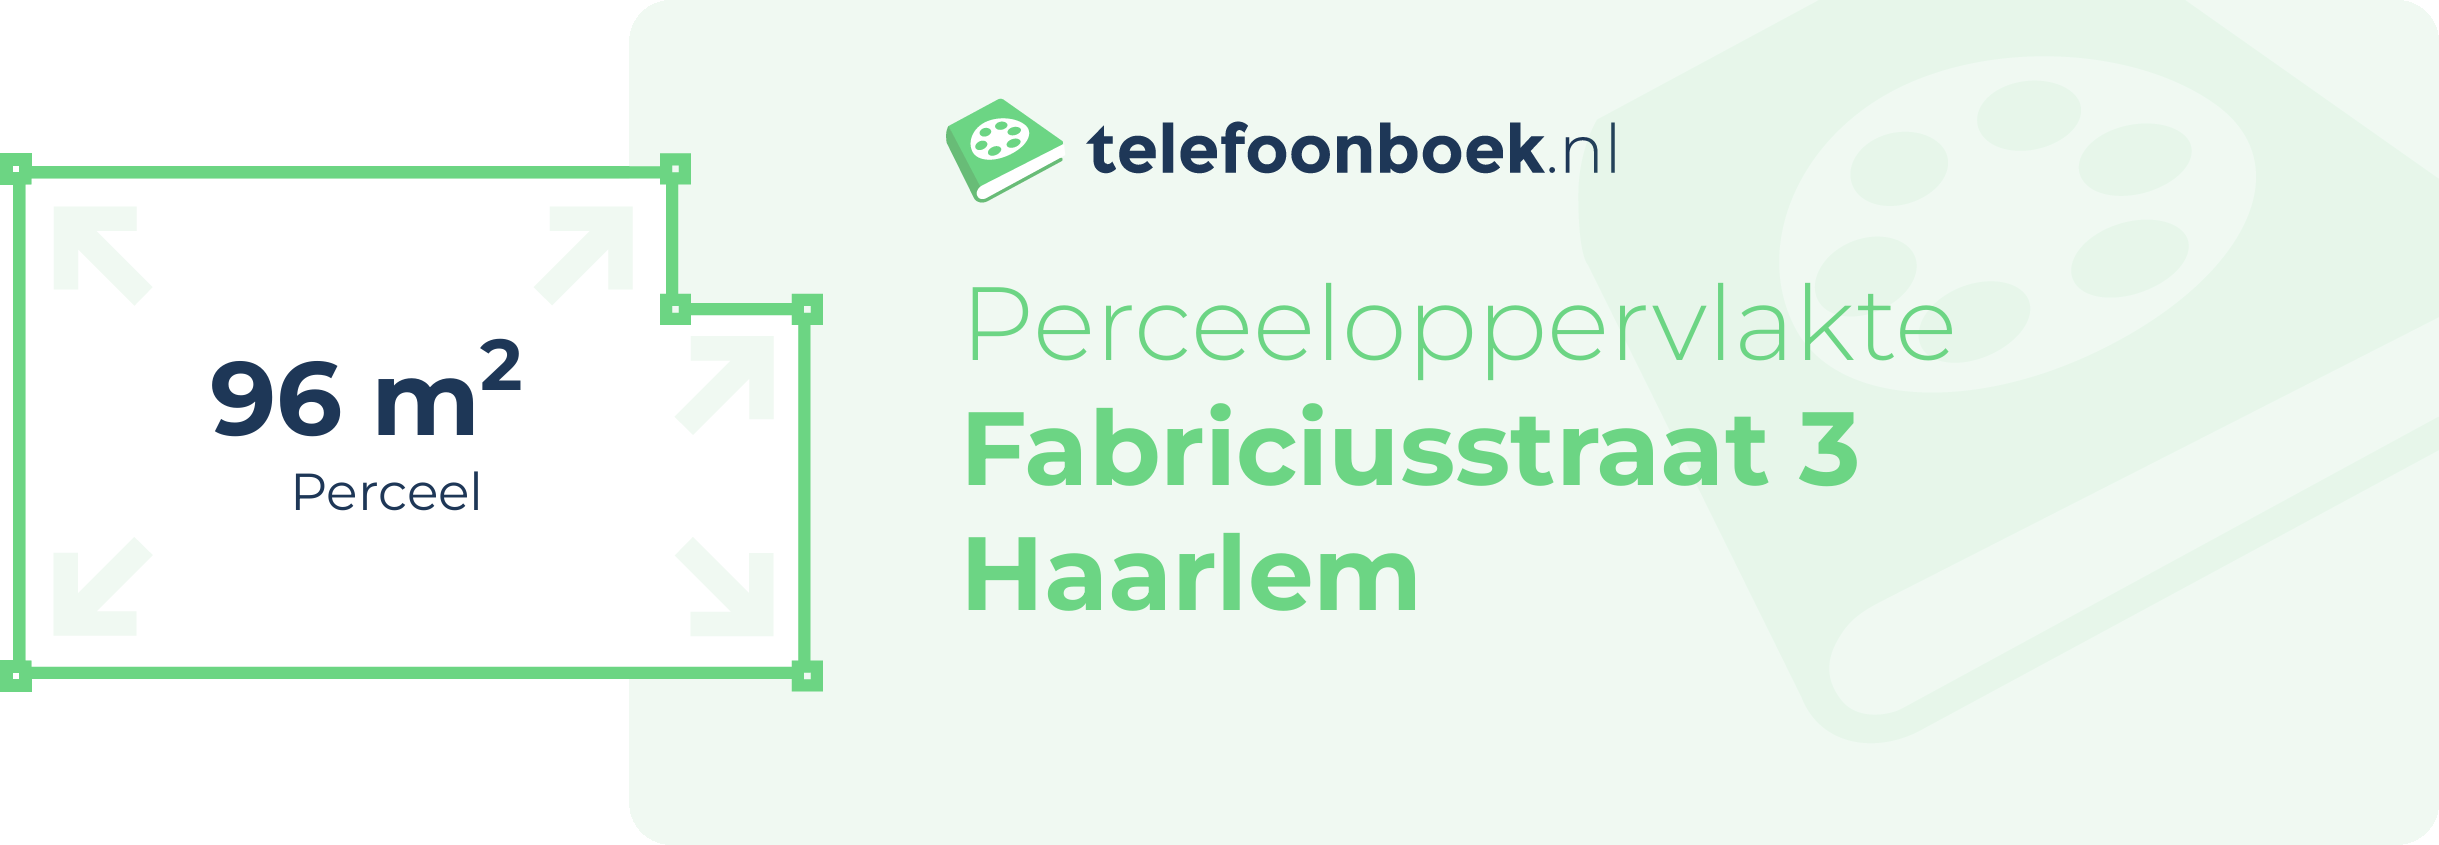 Perceeloppervlakte Fabriciusstraat 3 Haarlem